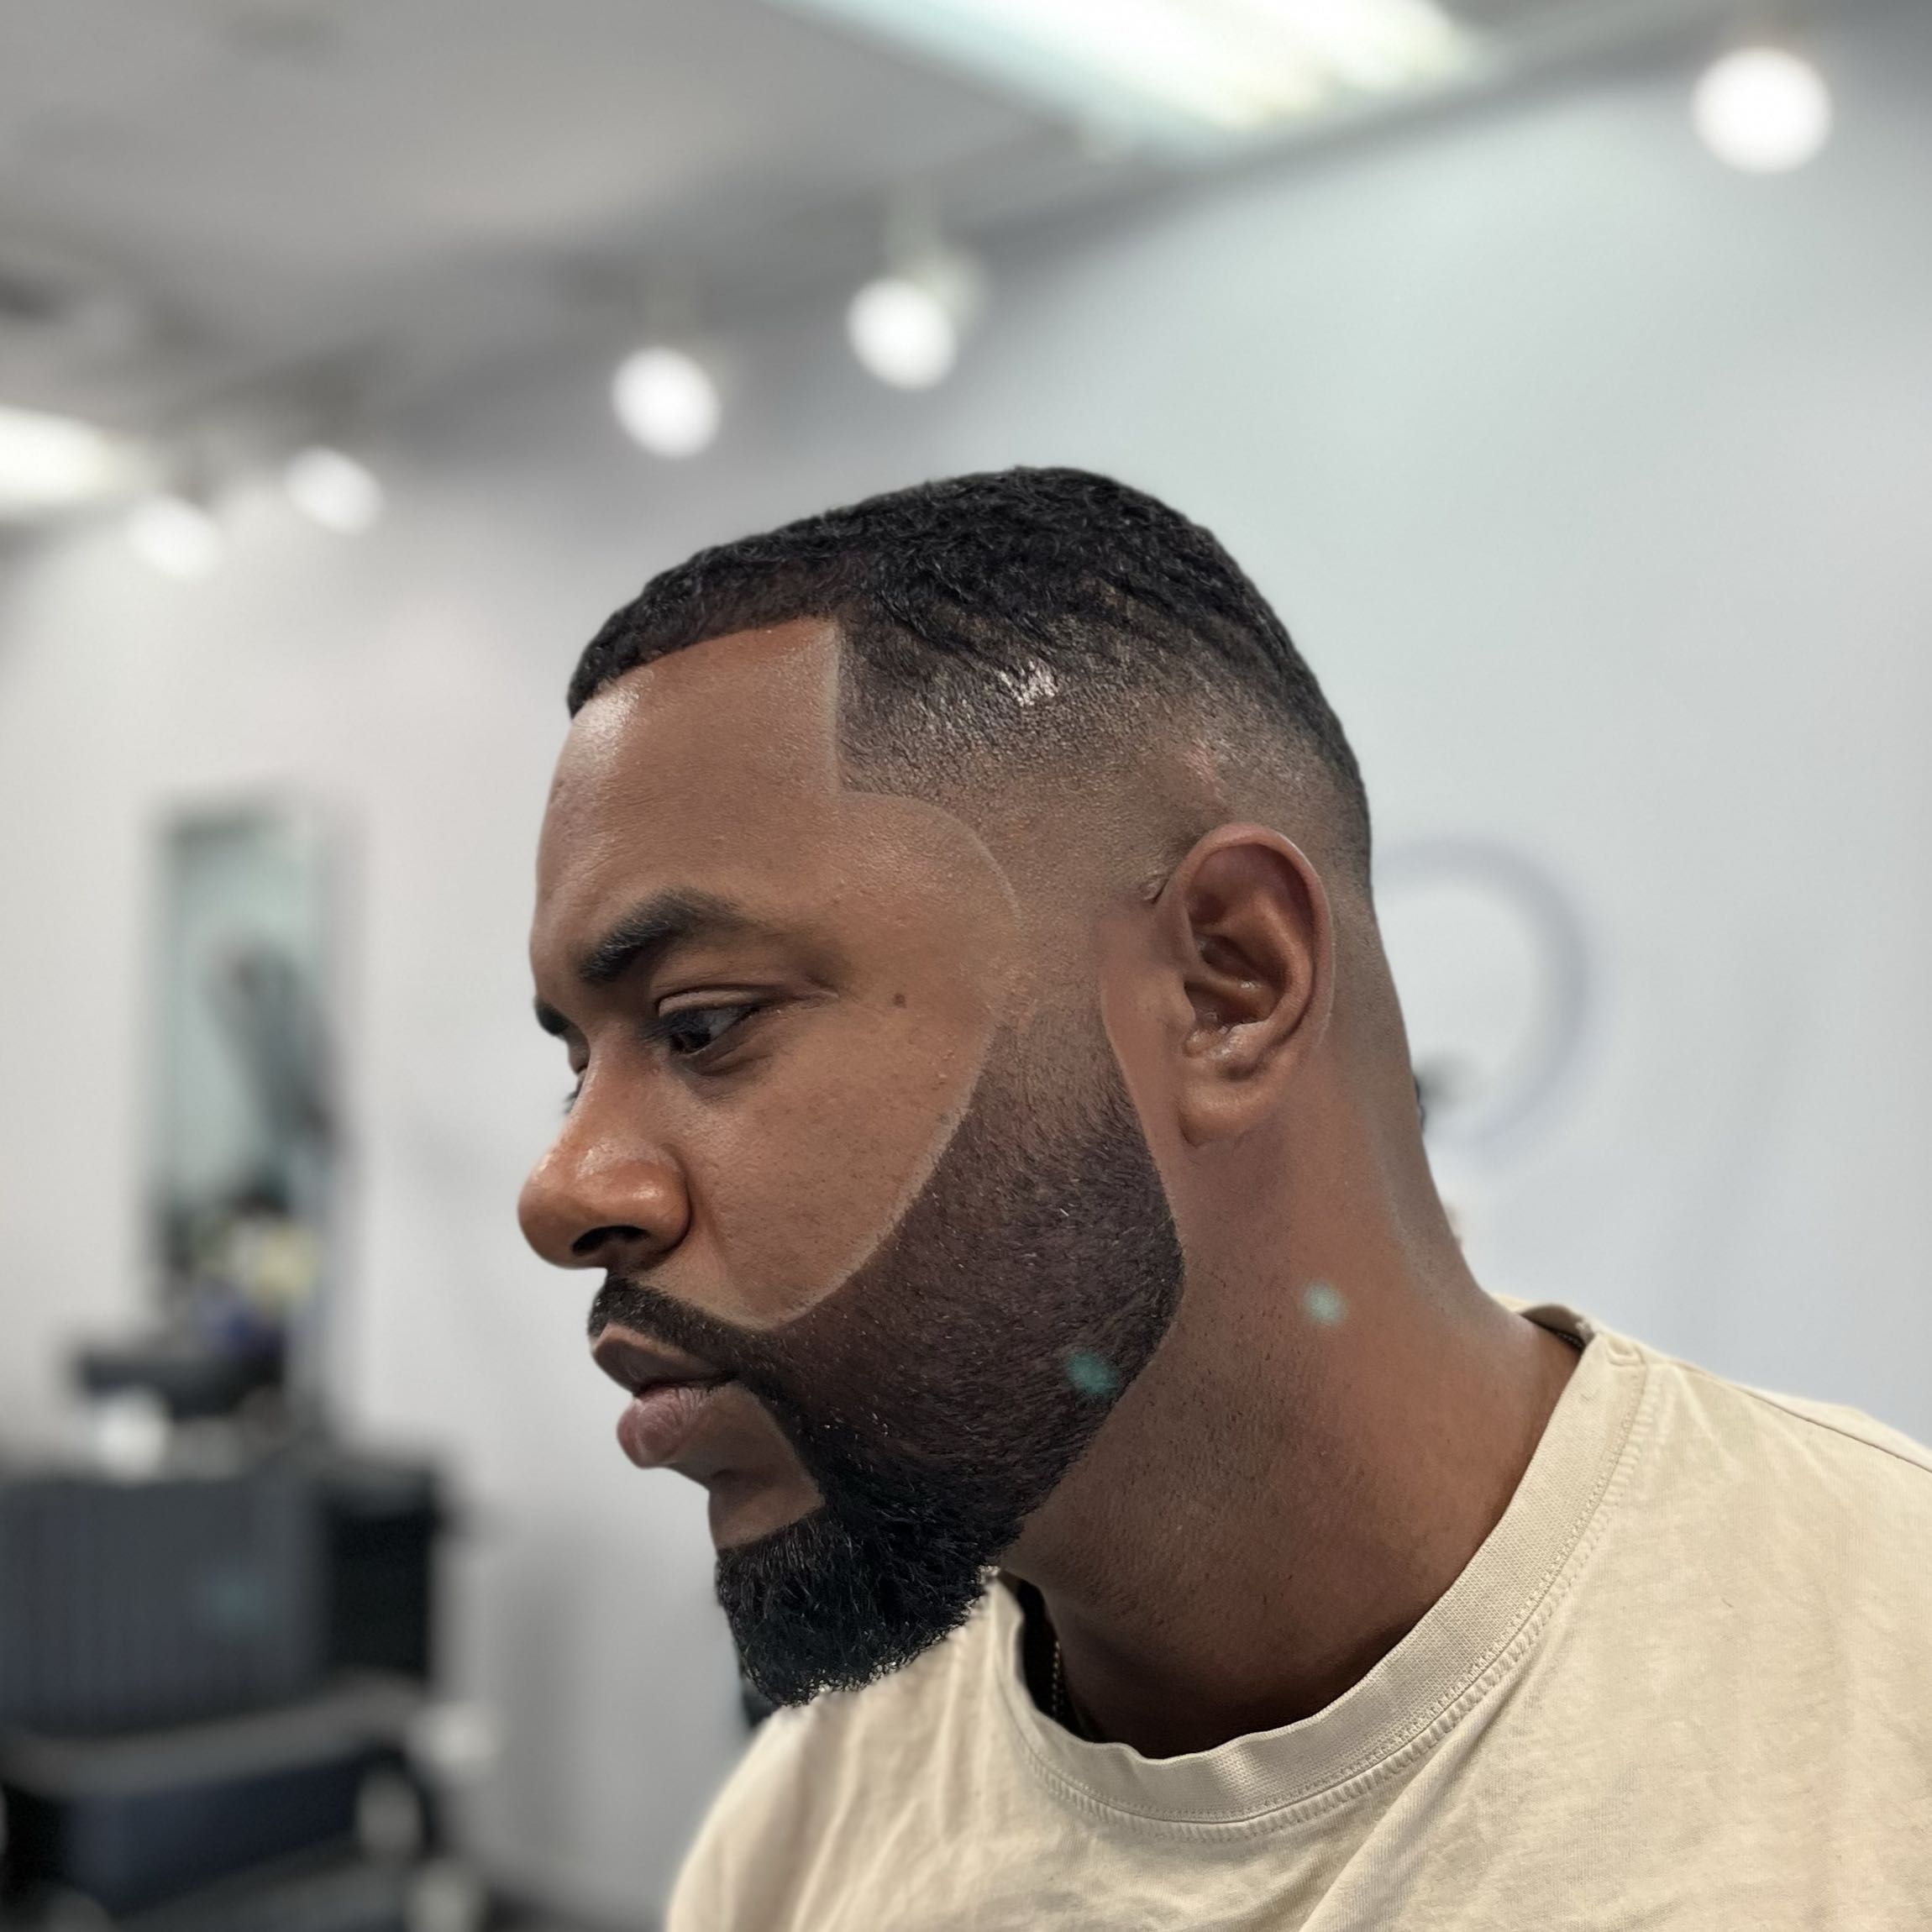 Haircut and Beard portfolio